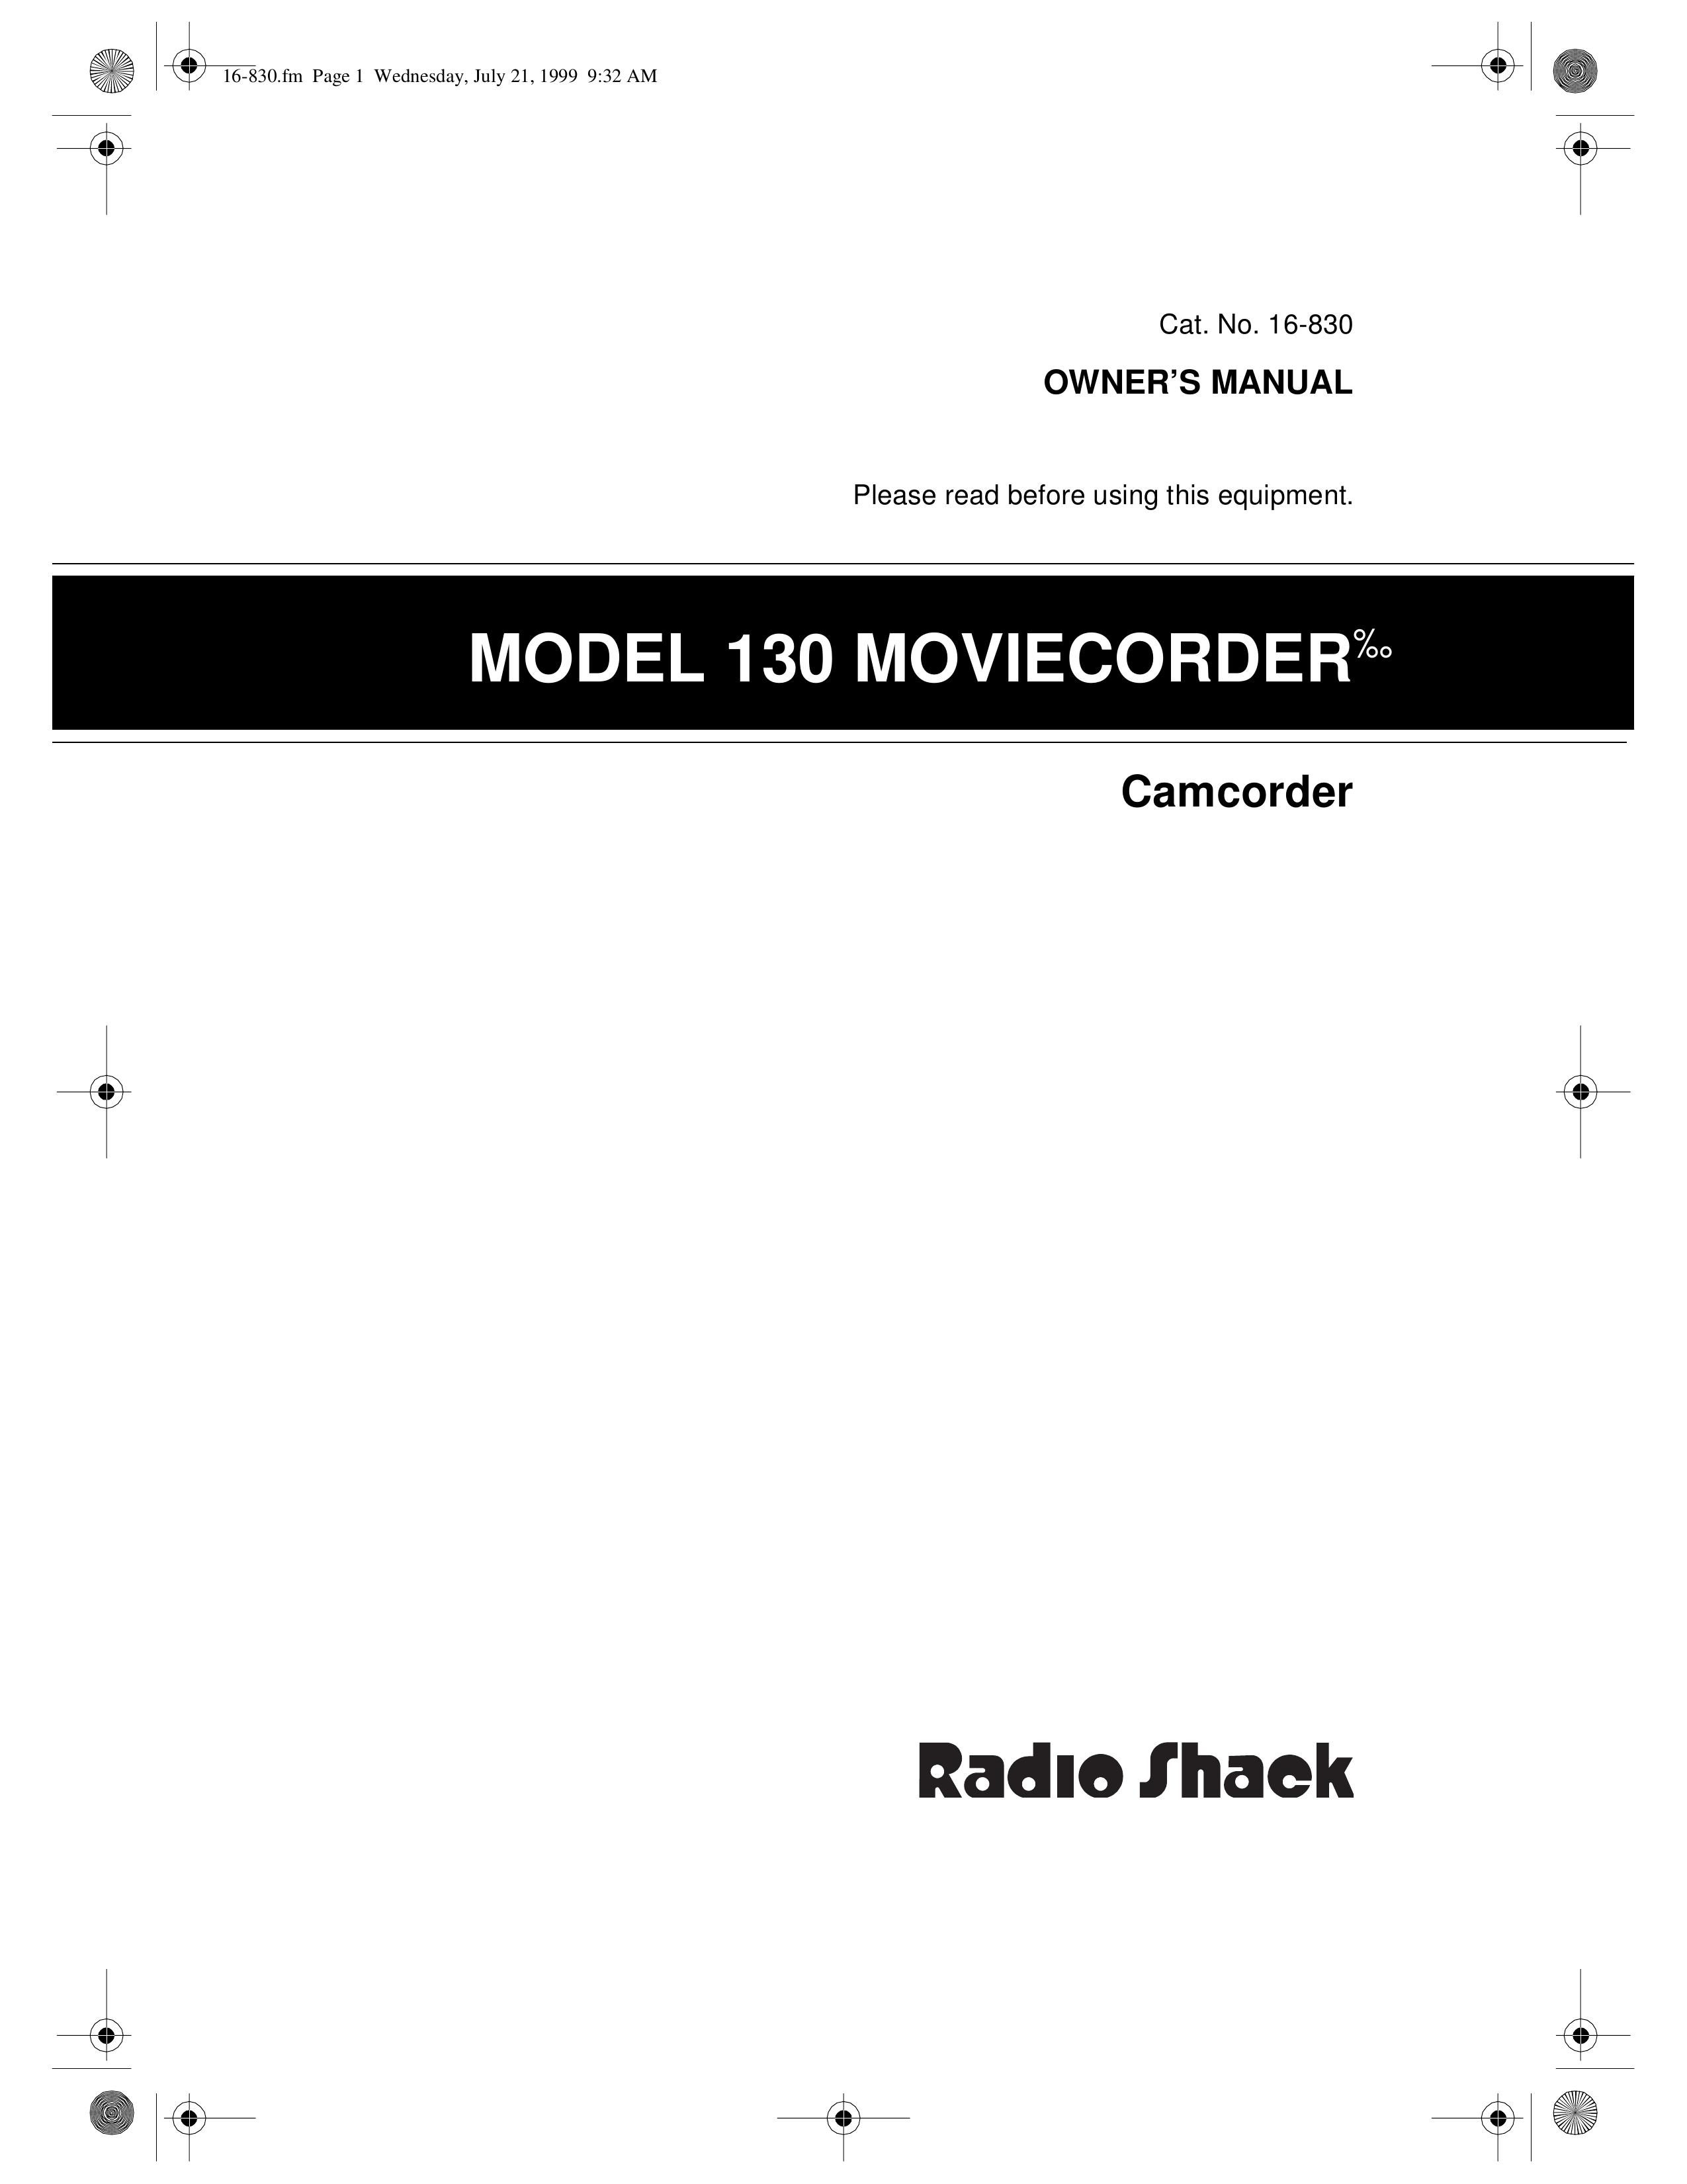 Radio Shack Model 130 Moviecorder Camcorder User Manual